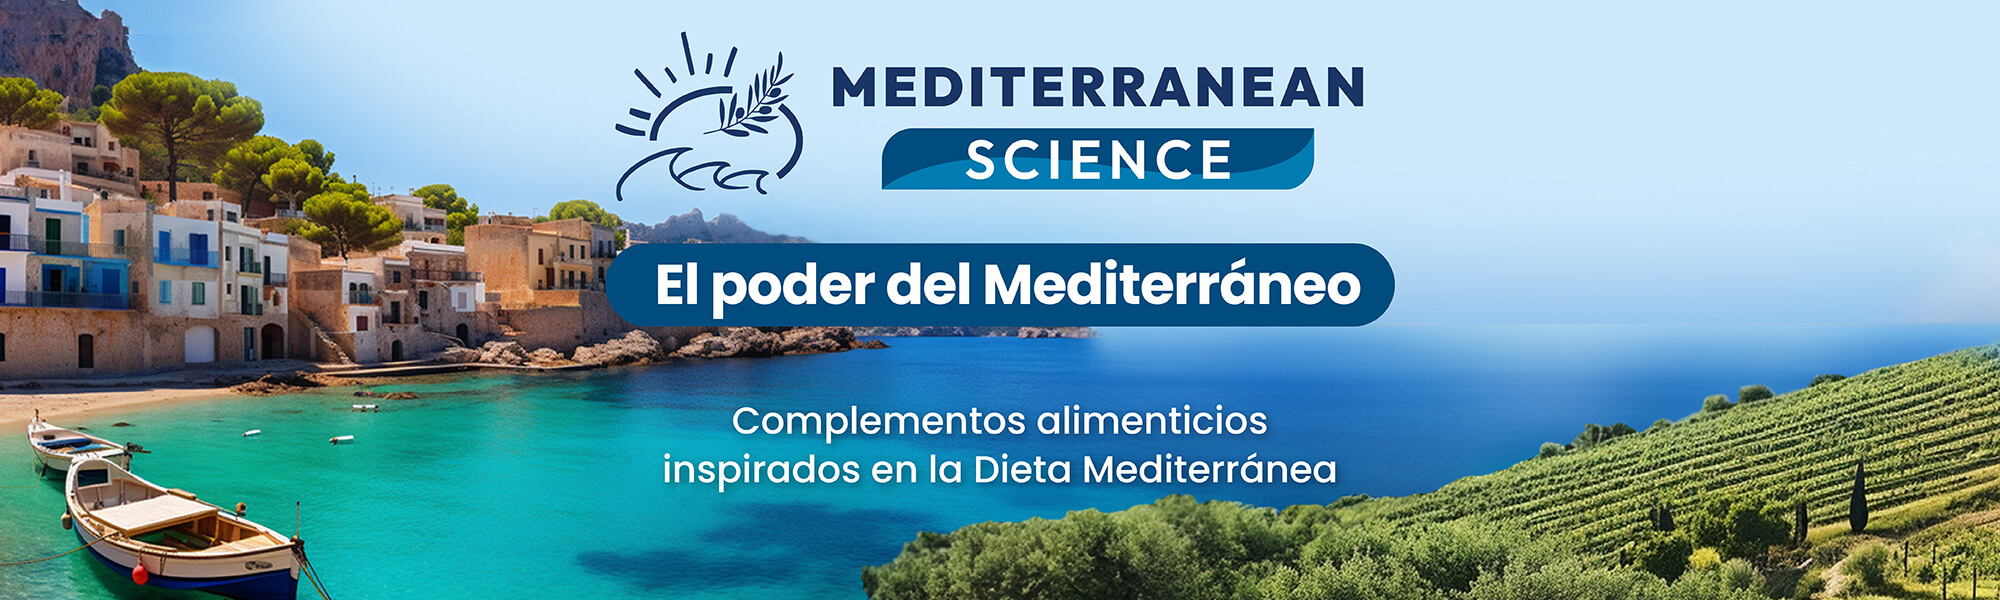 Mediterranean Science, el poder del Mediterráneo